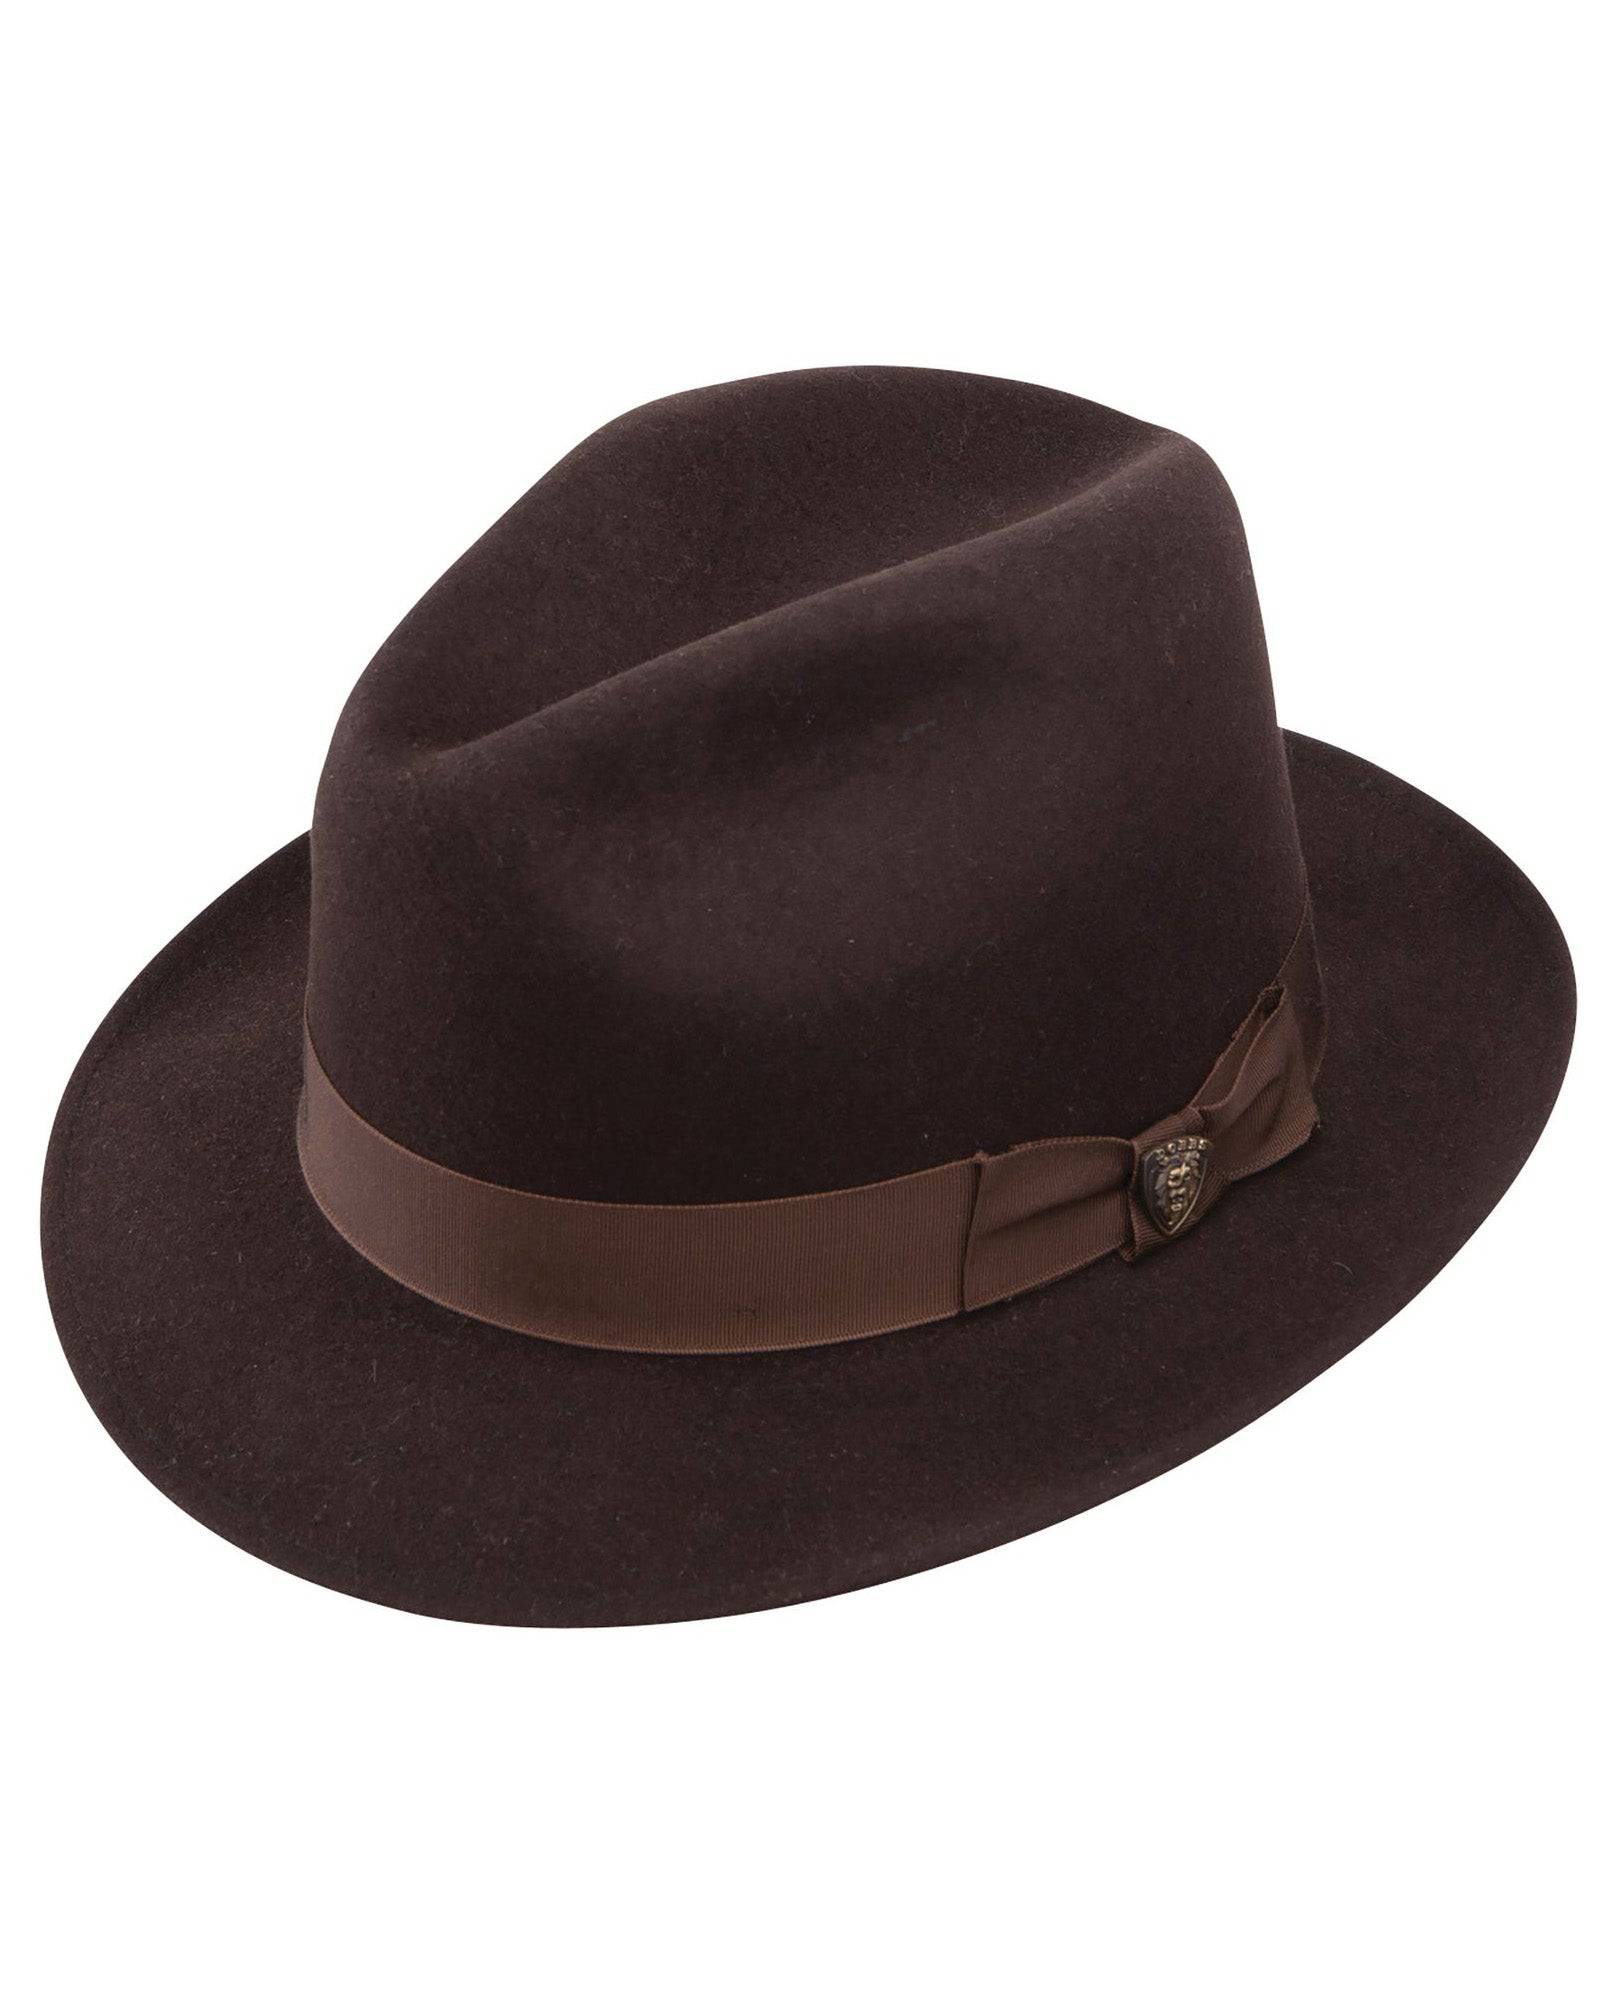 Dobbs Fox Fedora Hat in Cordova - Rainwater's Men's Clothing and Tuxedo Rental